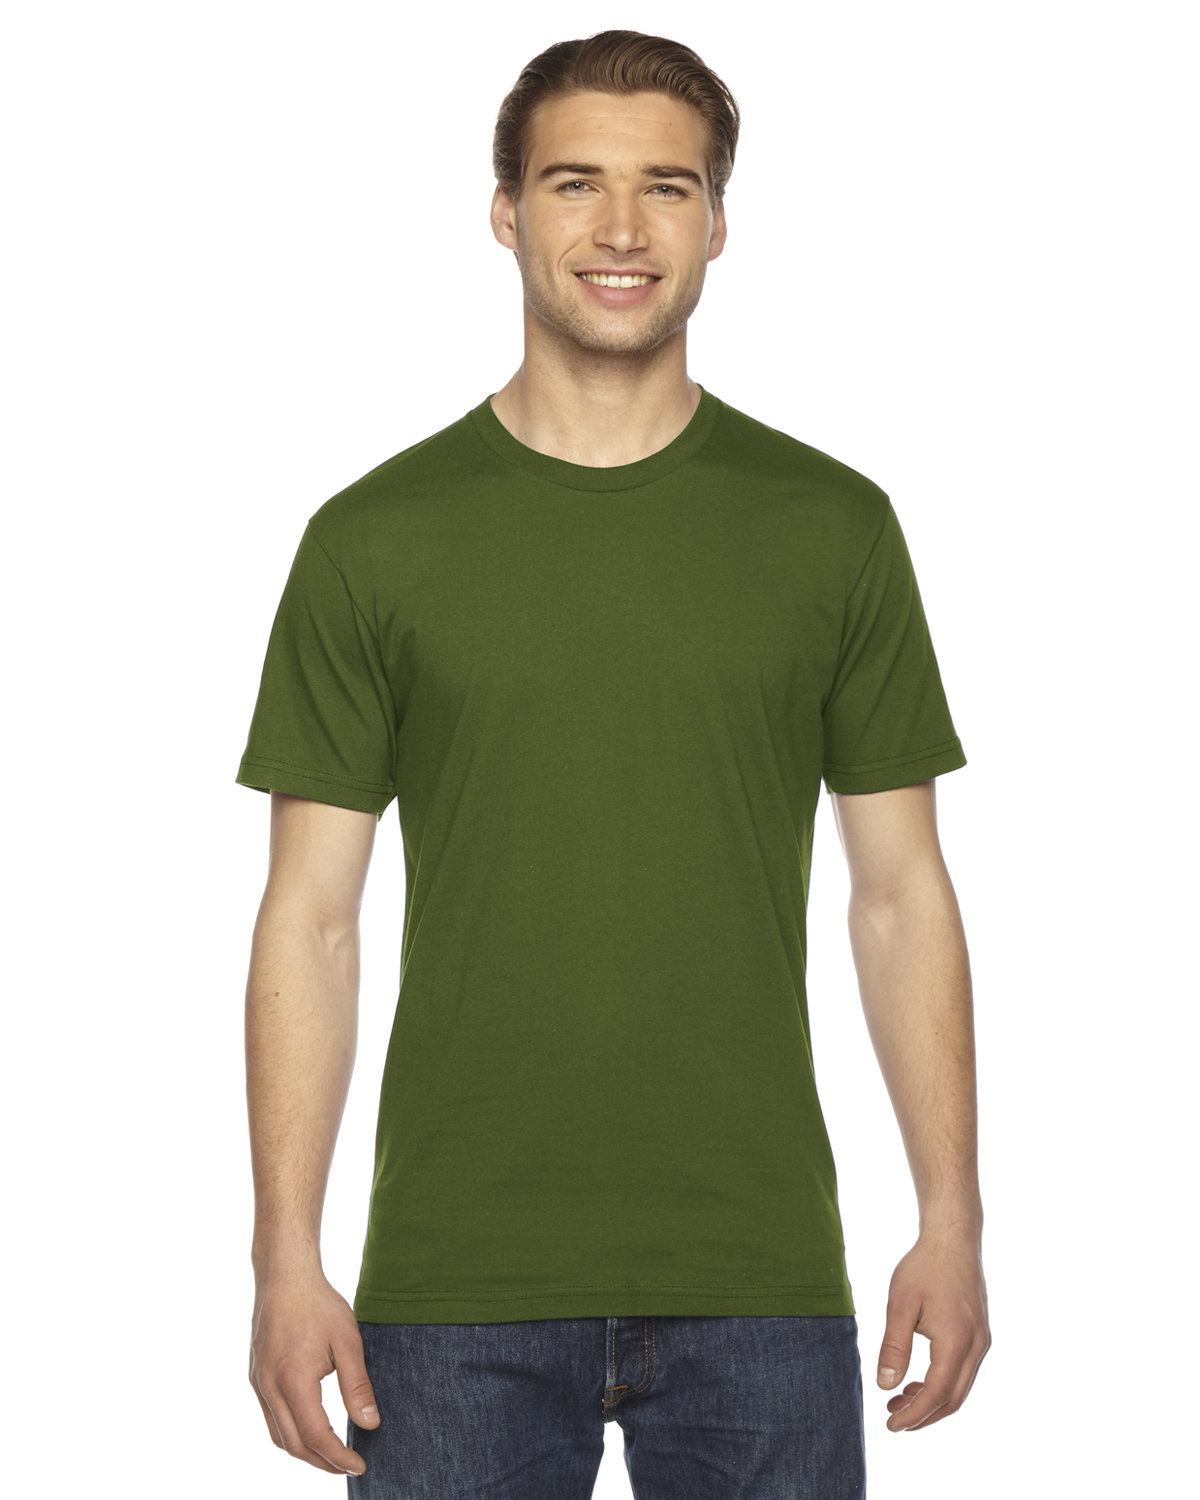 American Apparel Unisex Fine Jersey Short-Sleeve T-Shirt OLIVE 